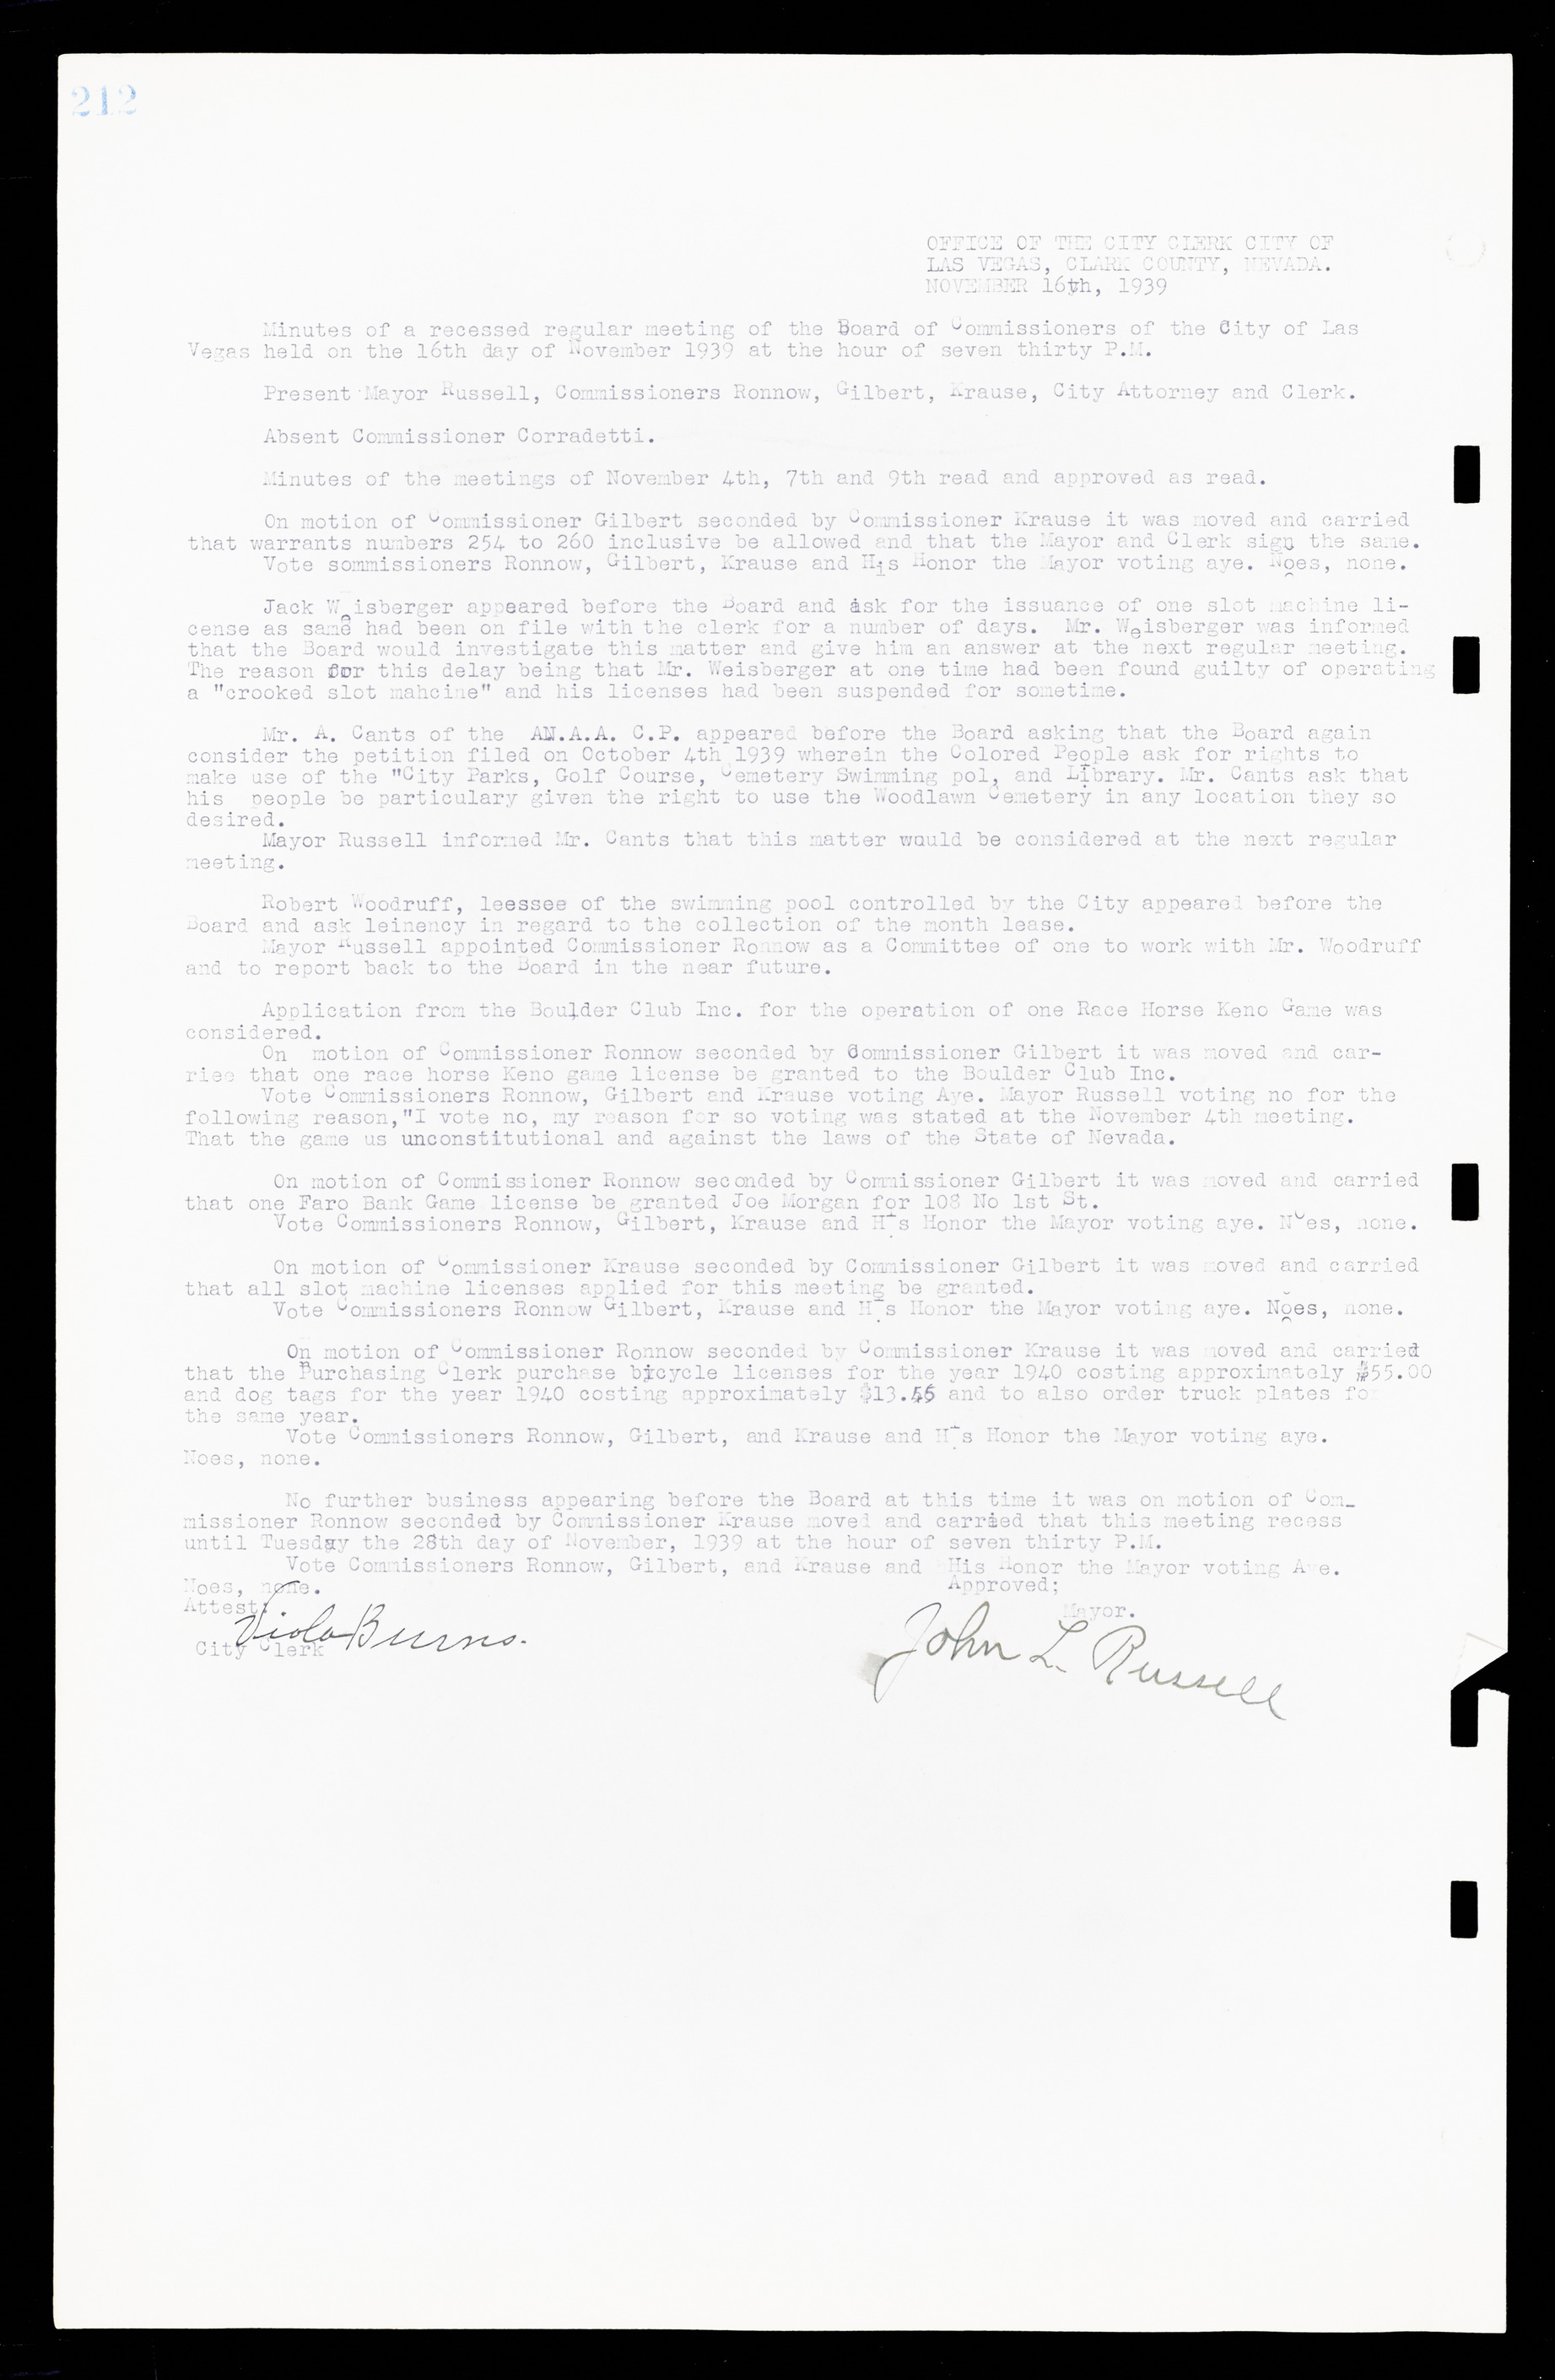 Las Vegas City Commission Minutes, February 17, 1937 to August 4, 1942, lvc000004-230